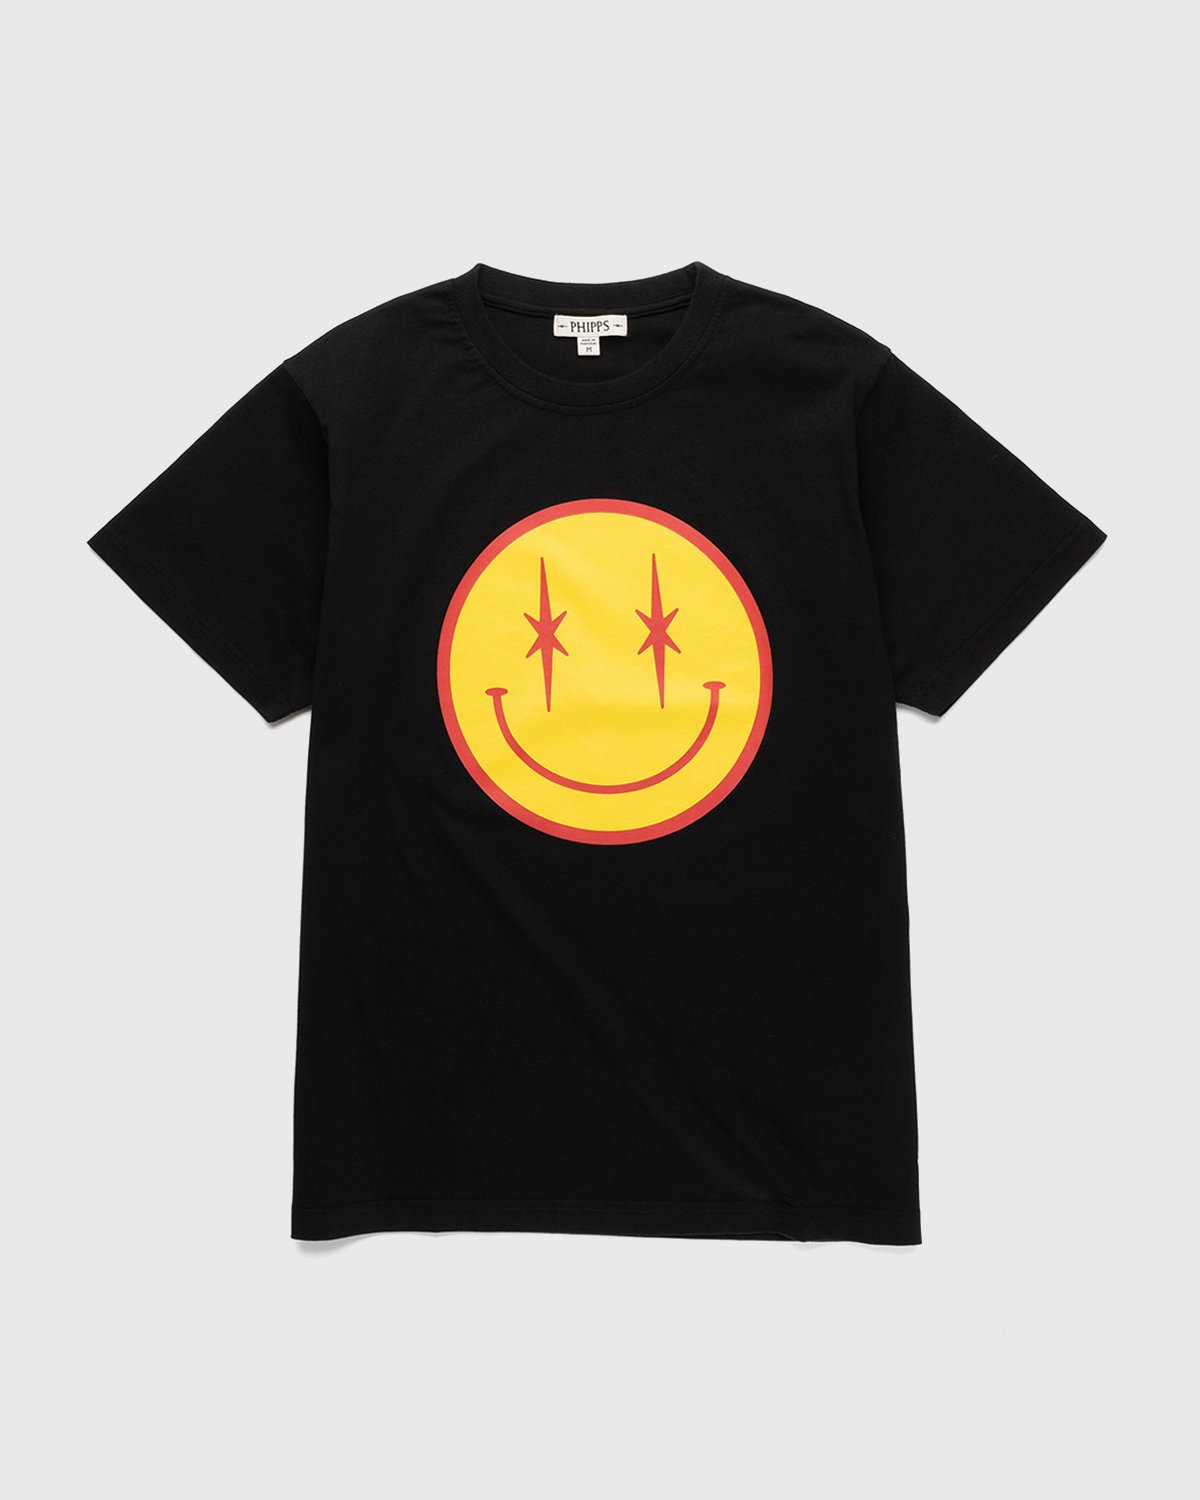 Phipps - Smiley T-Shirt Black - Clothing - Black - Image 1